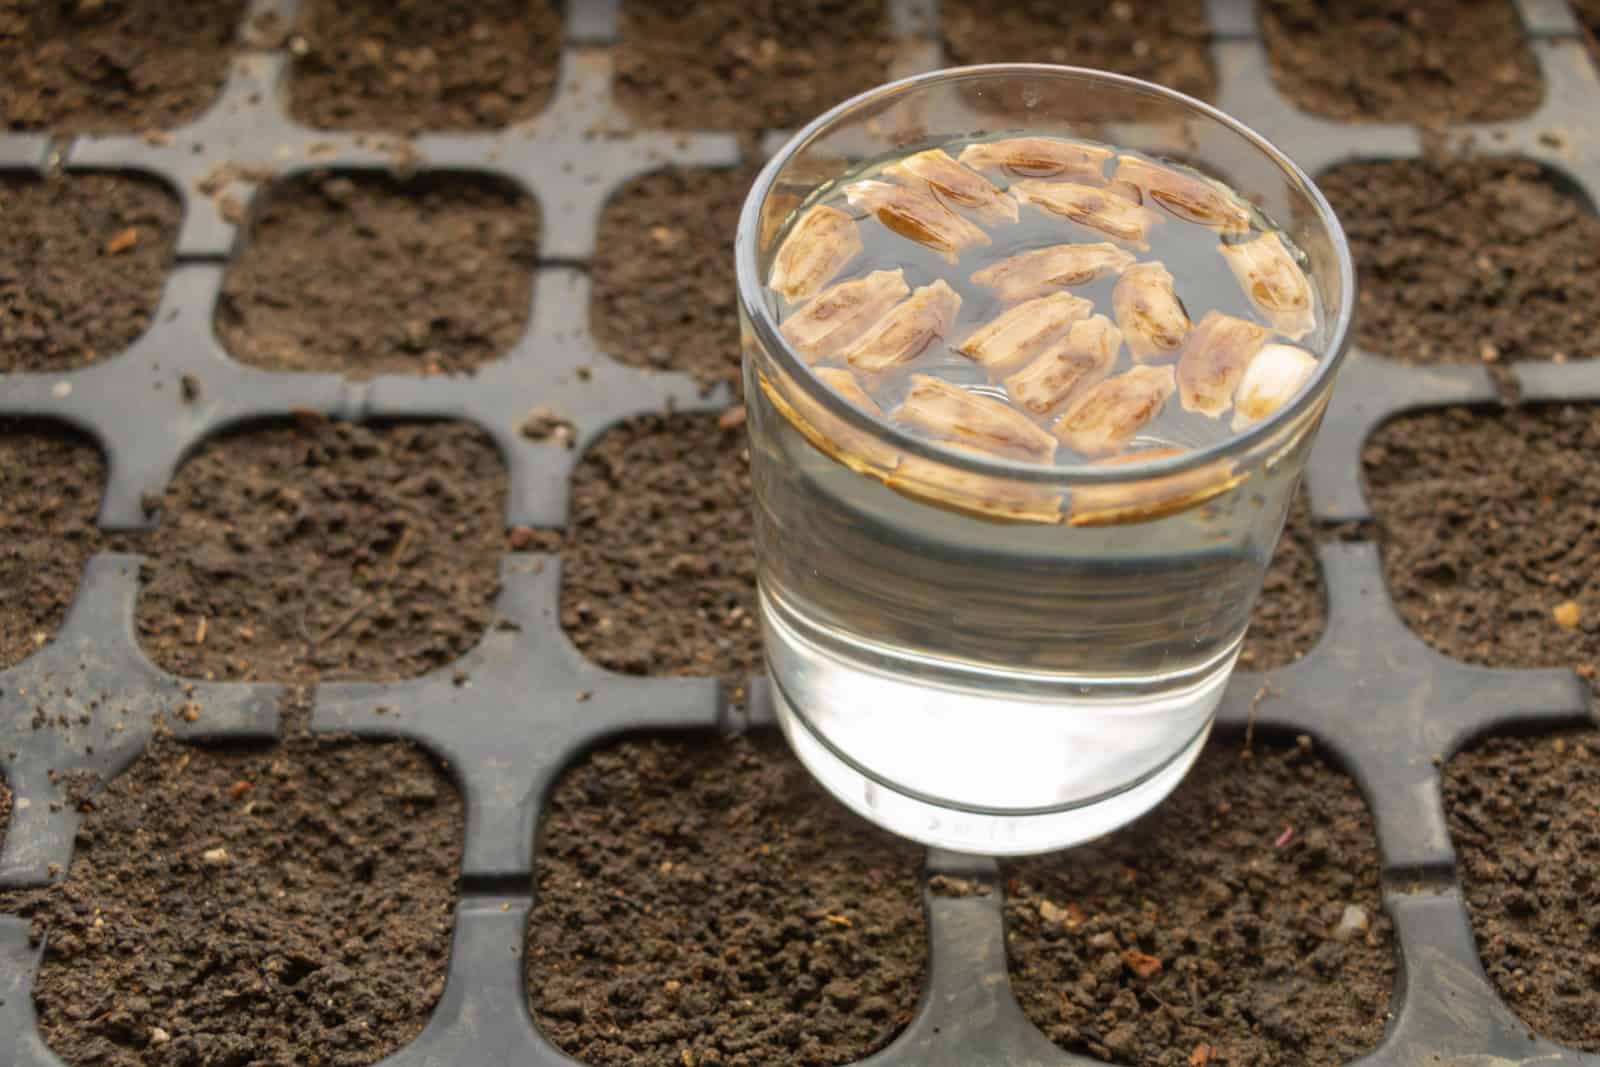 Soaking seeds in water before planting